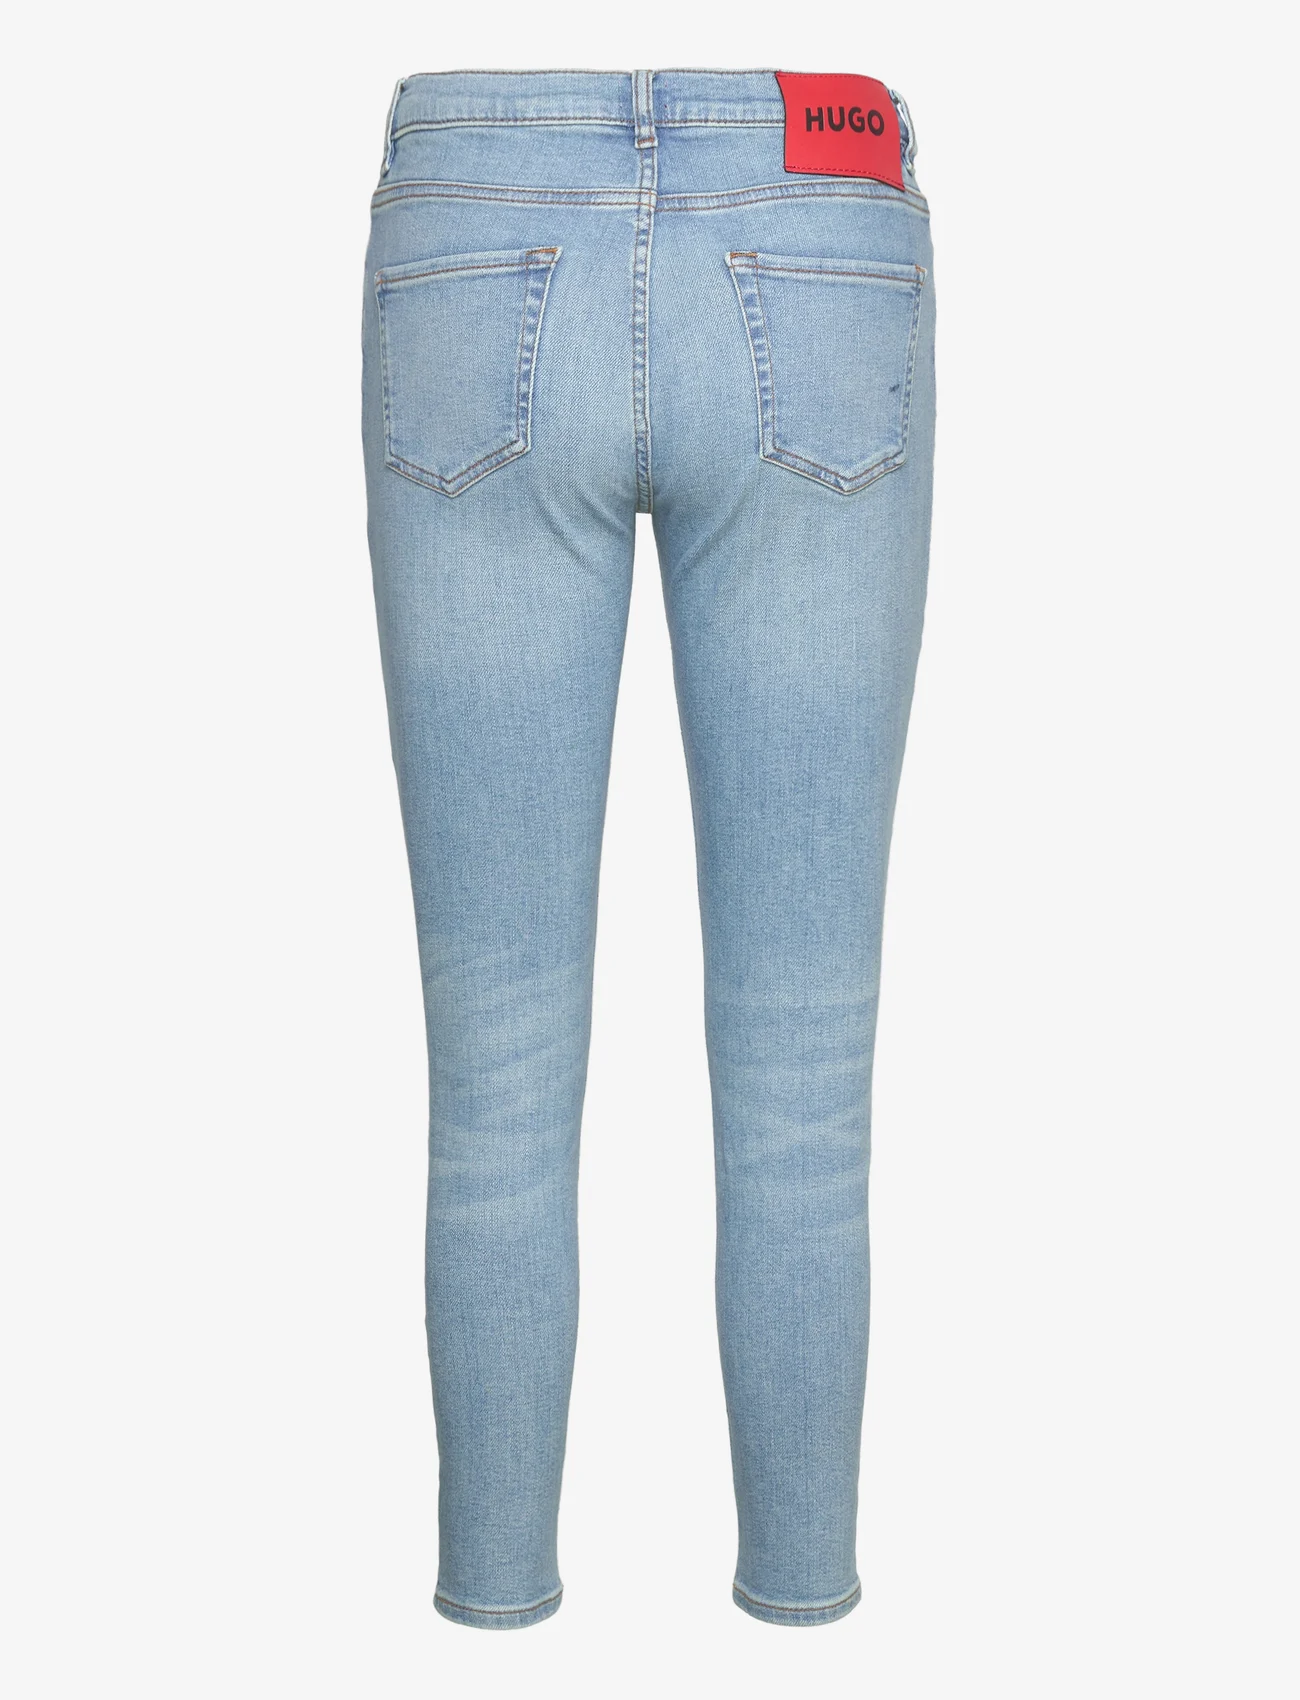 HUGO - 932 - jeans skinny - turquoise/aqua - 1